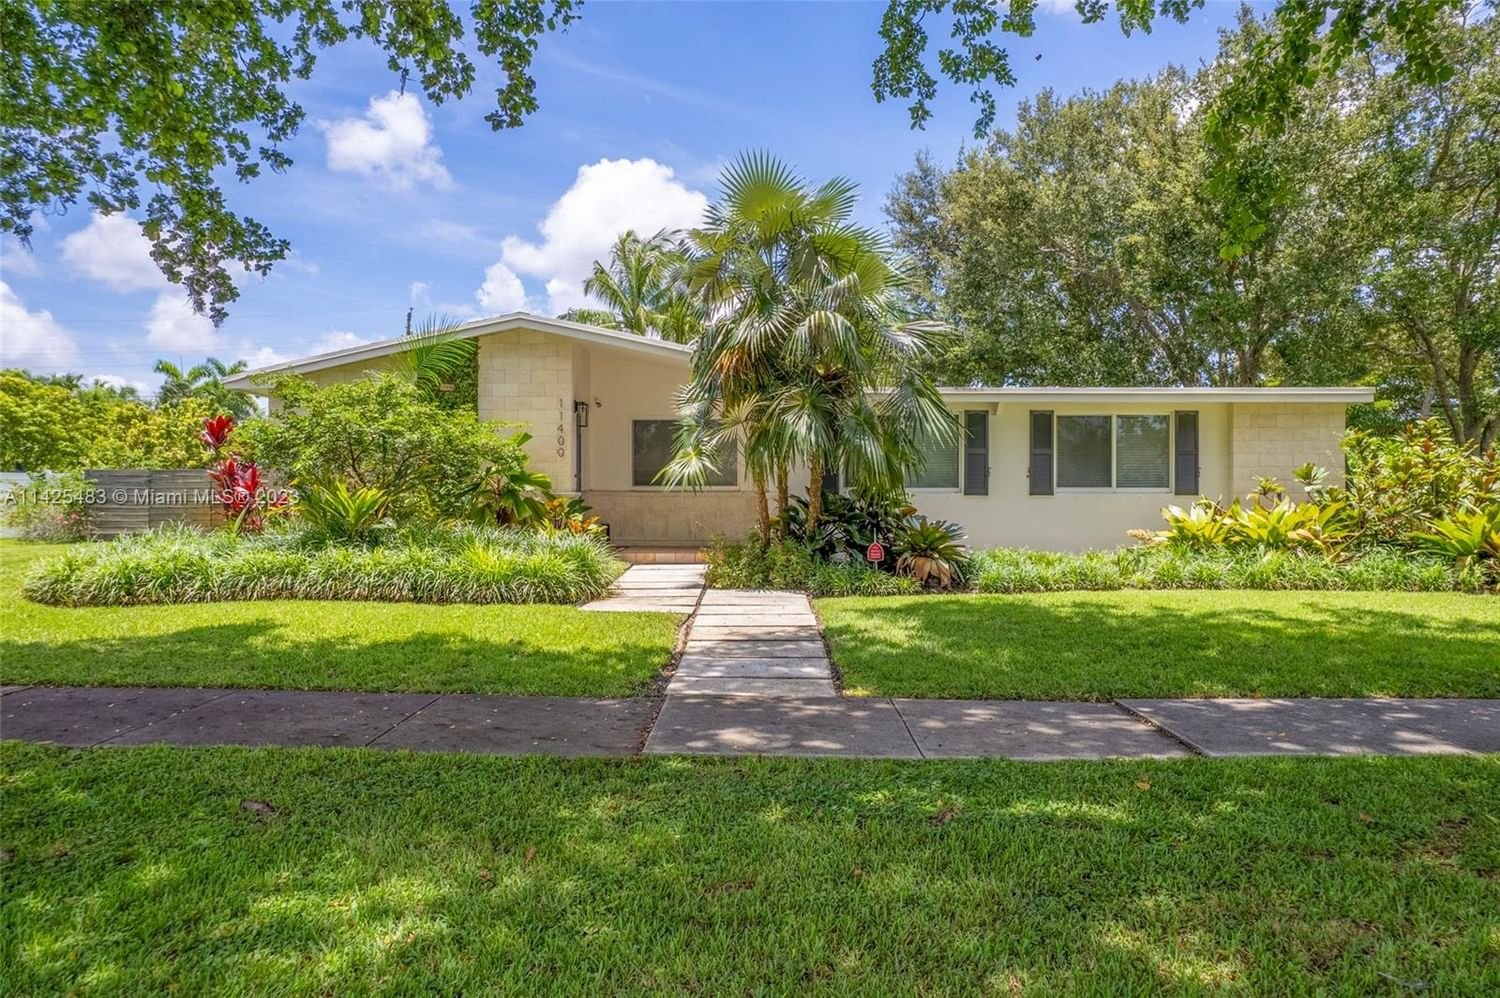 Real estate property located at 11400 107th Ave, Miami-Dade County, Miami, FL